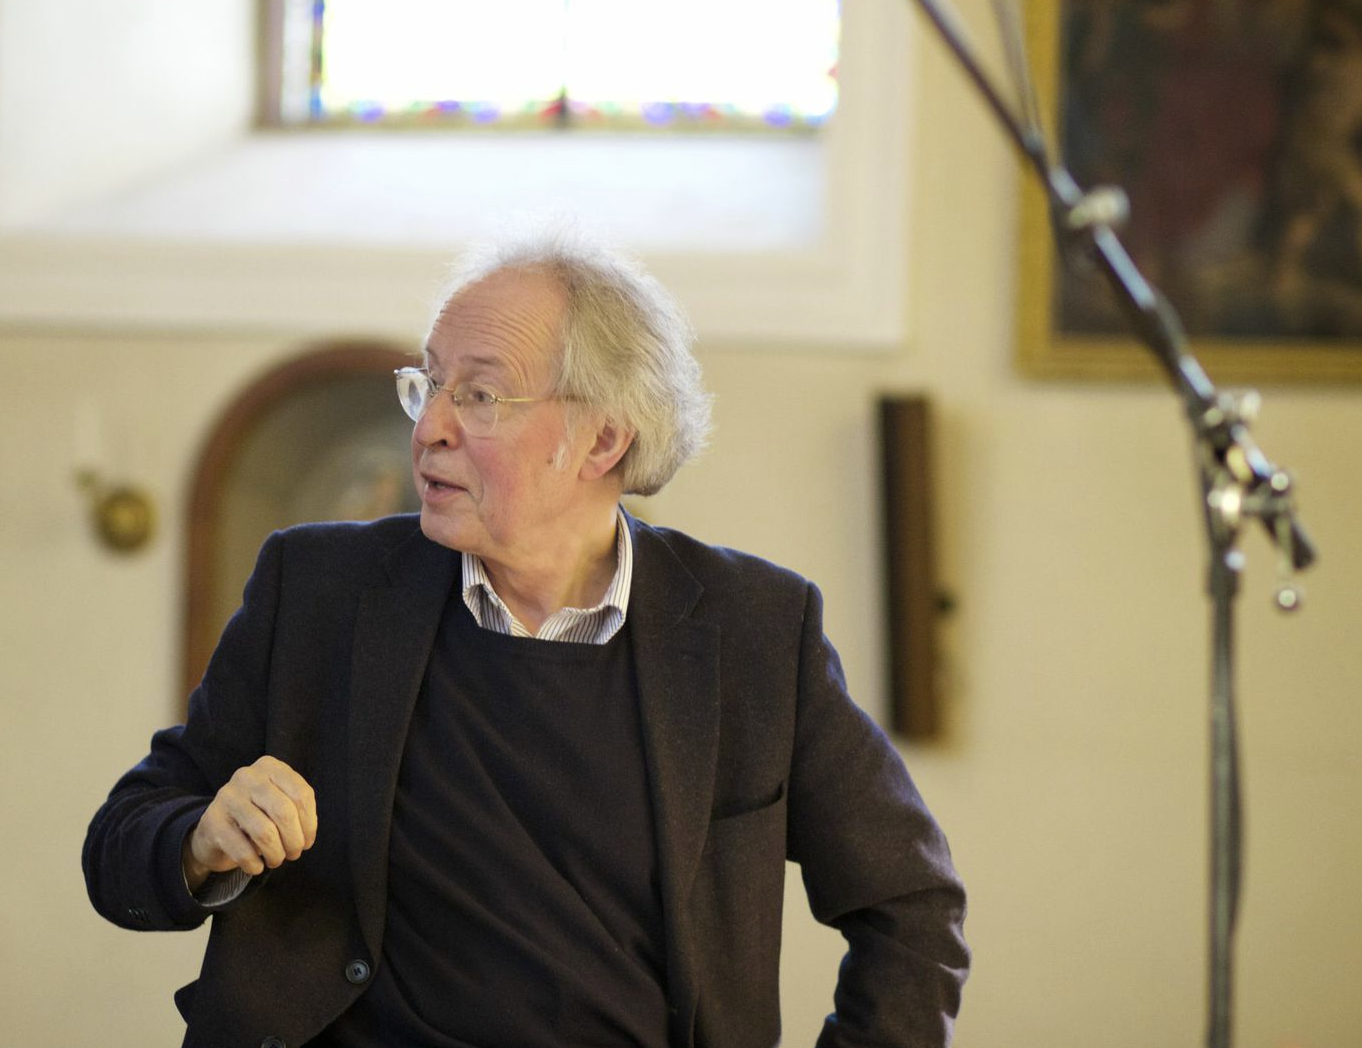 Hans Michael Beuerle en octobre dernier, lors de l'enregistrement du Requiem de Campra. Benoît Haller figuraient parmi les solistes.